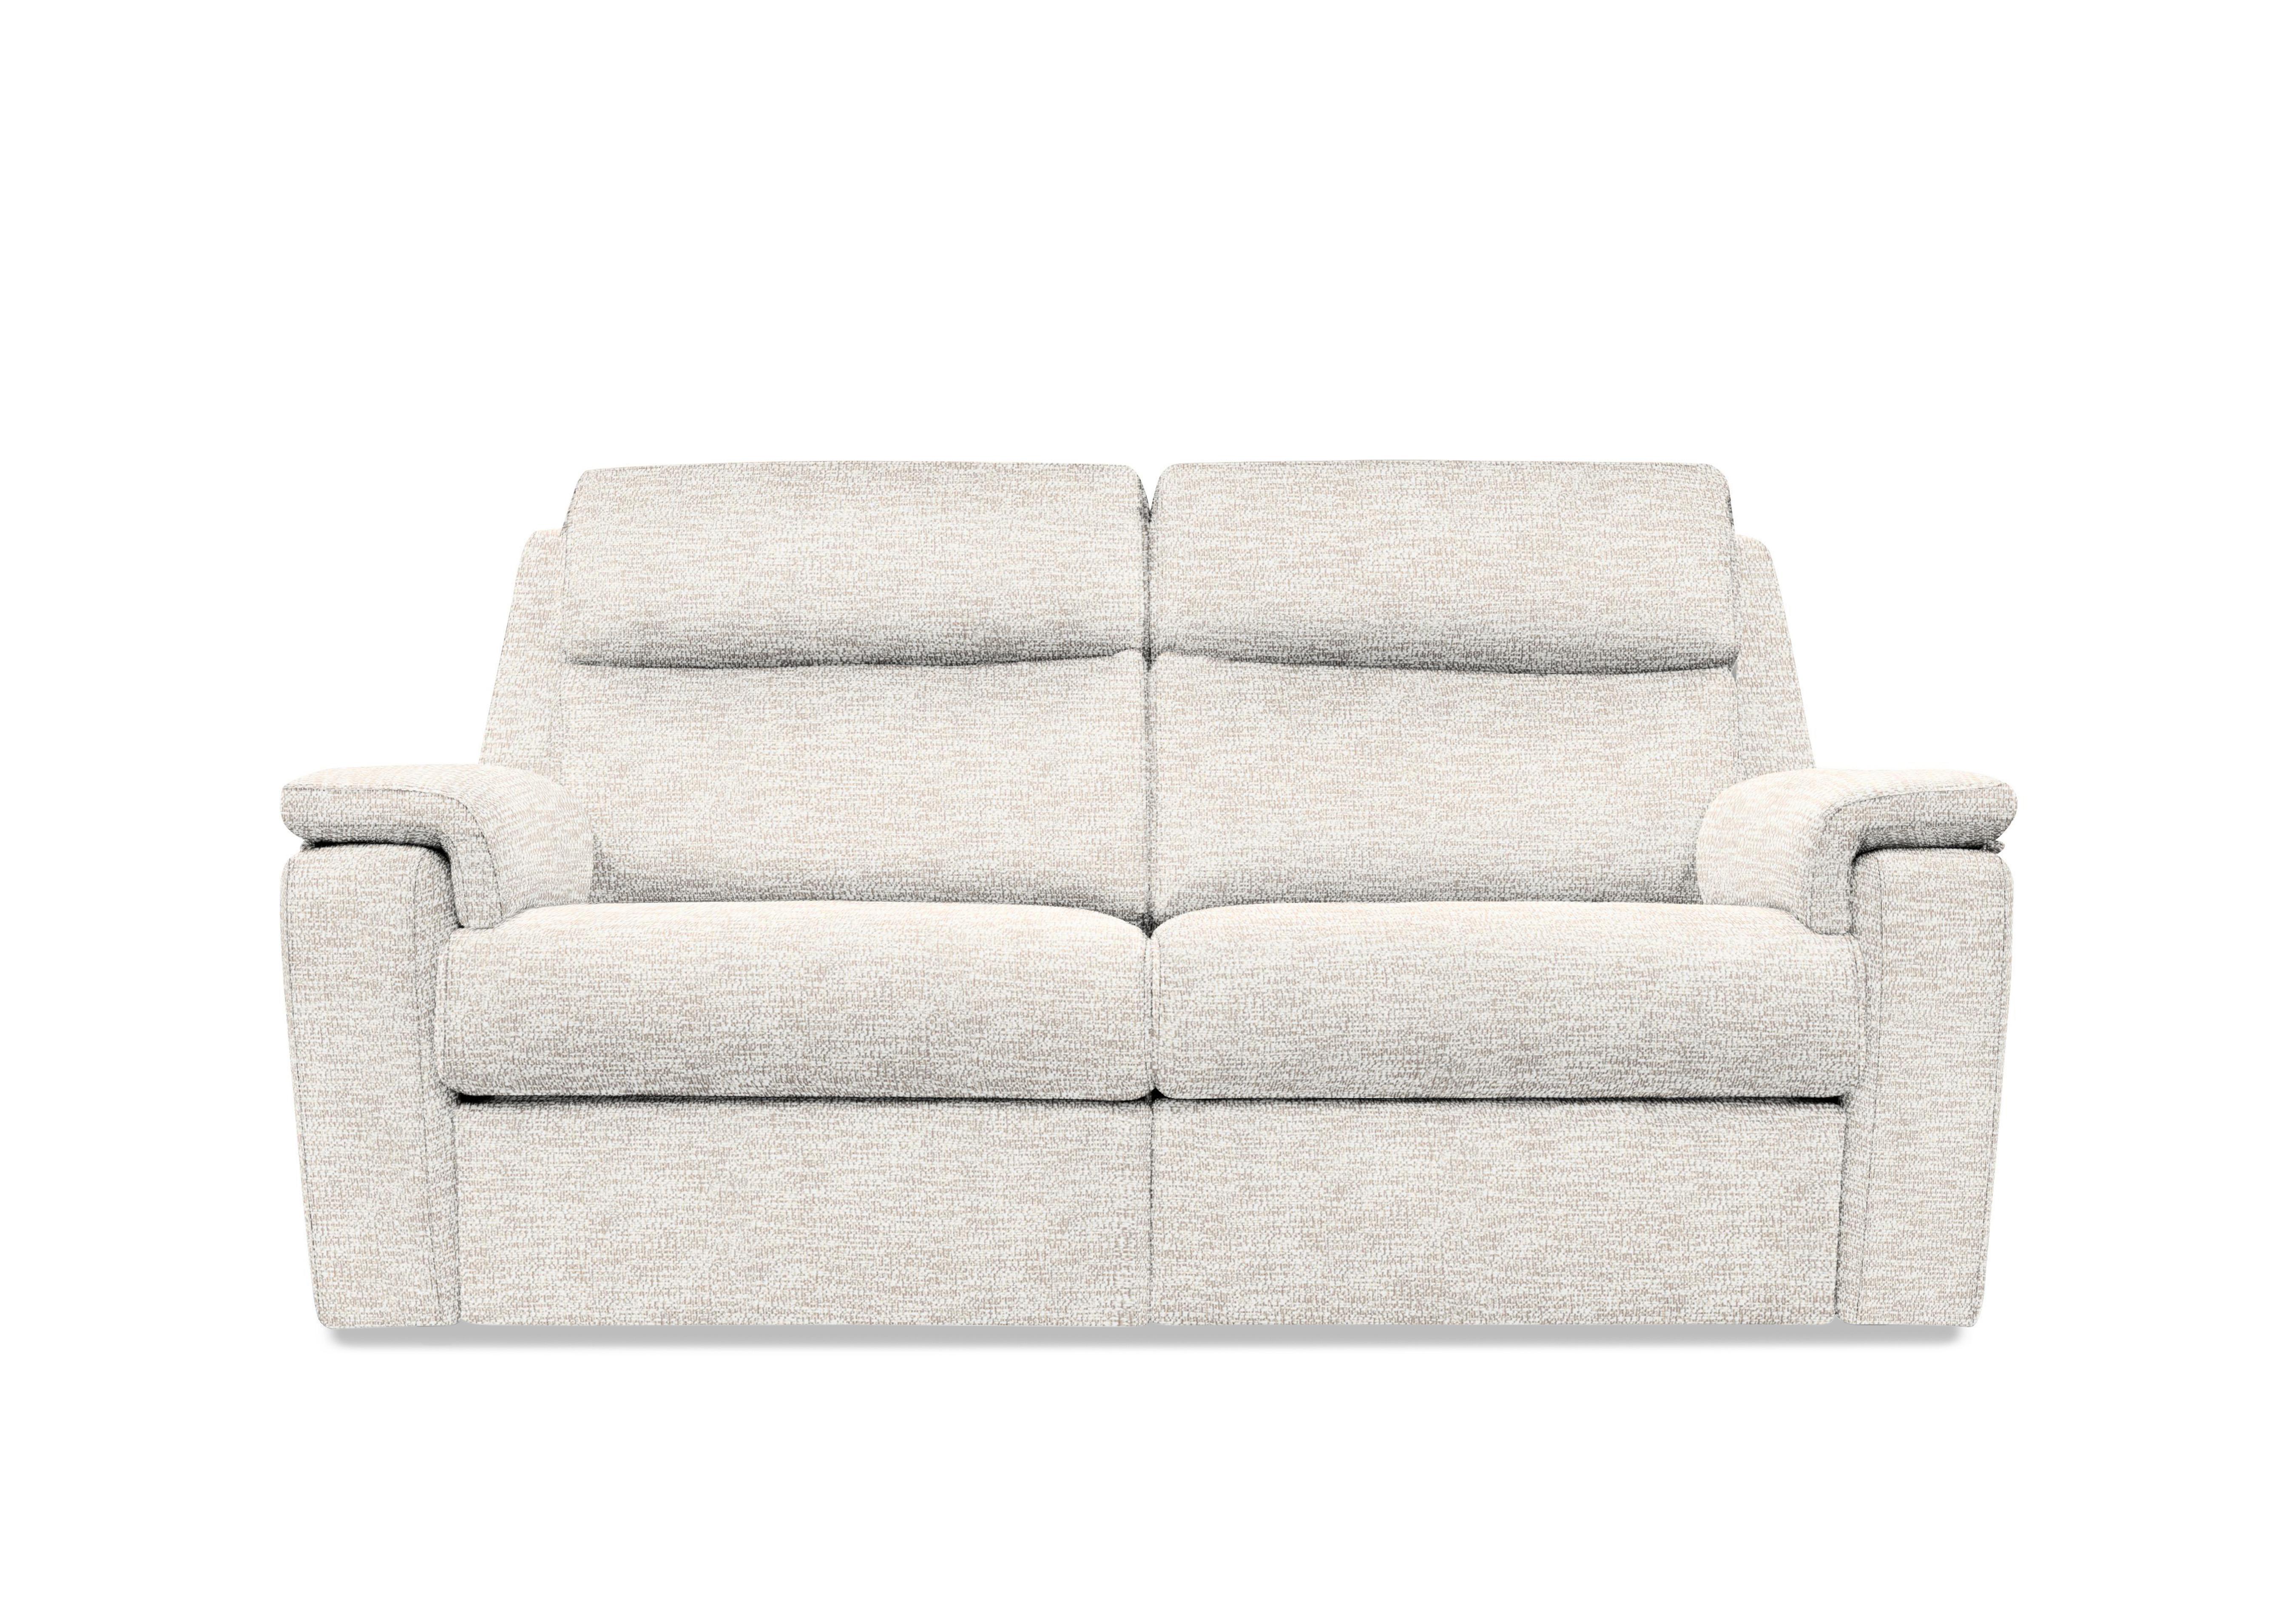 Thornbury 3 Seater Fabric Power Recliner Sofa with Power Headrests and Power Lumbar in C931 Rush Cream on Furniture Village